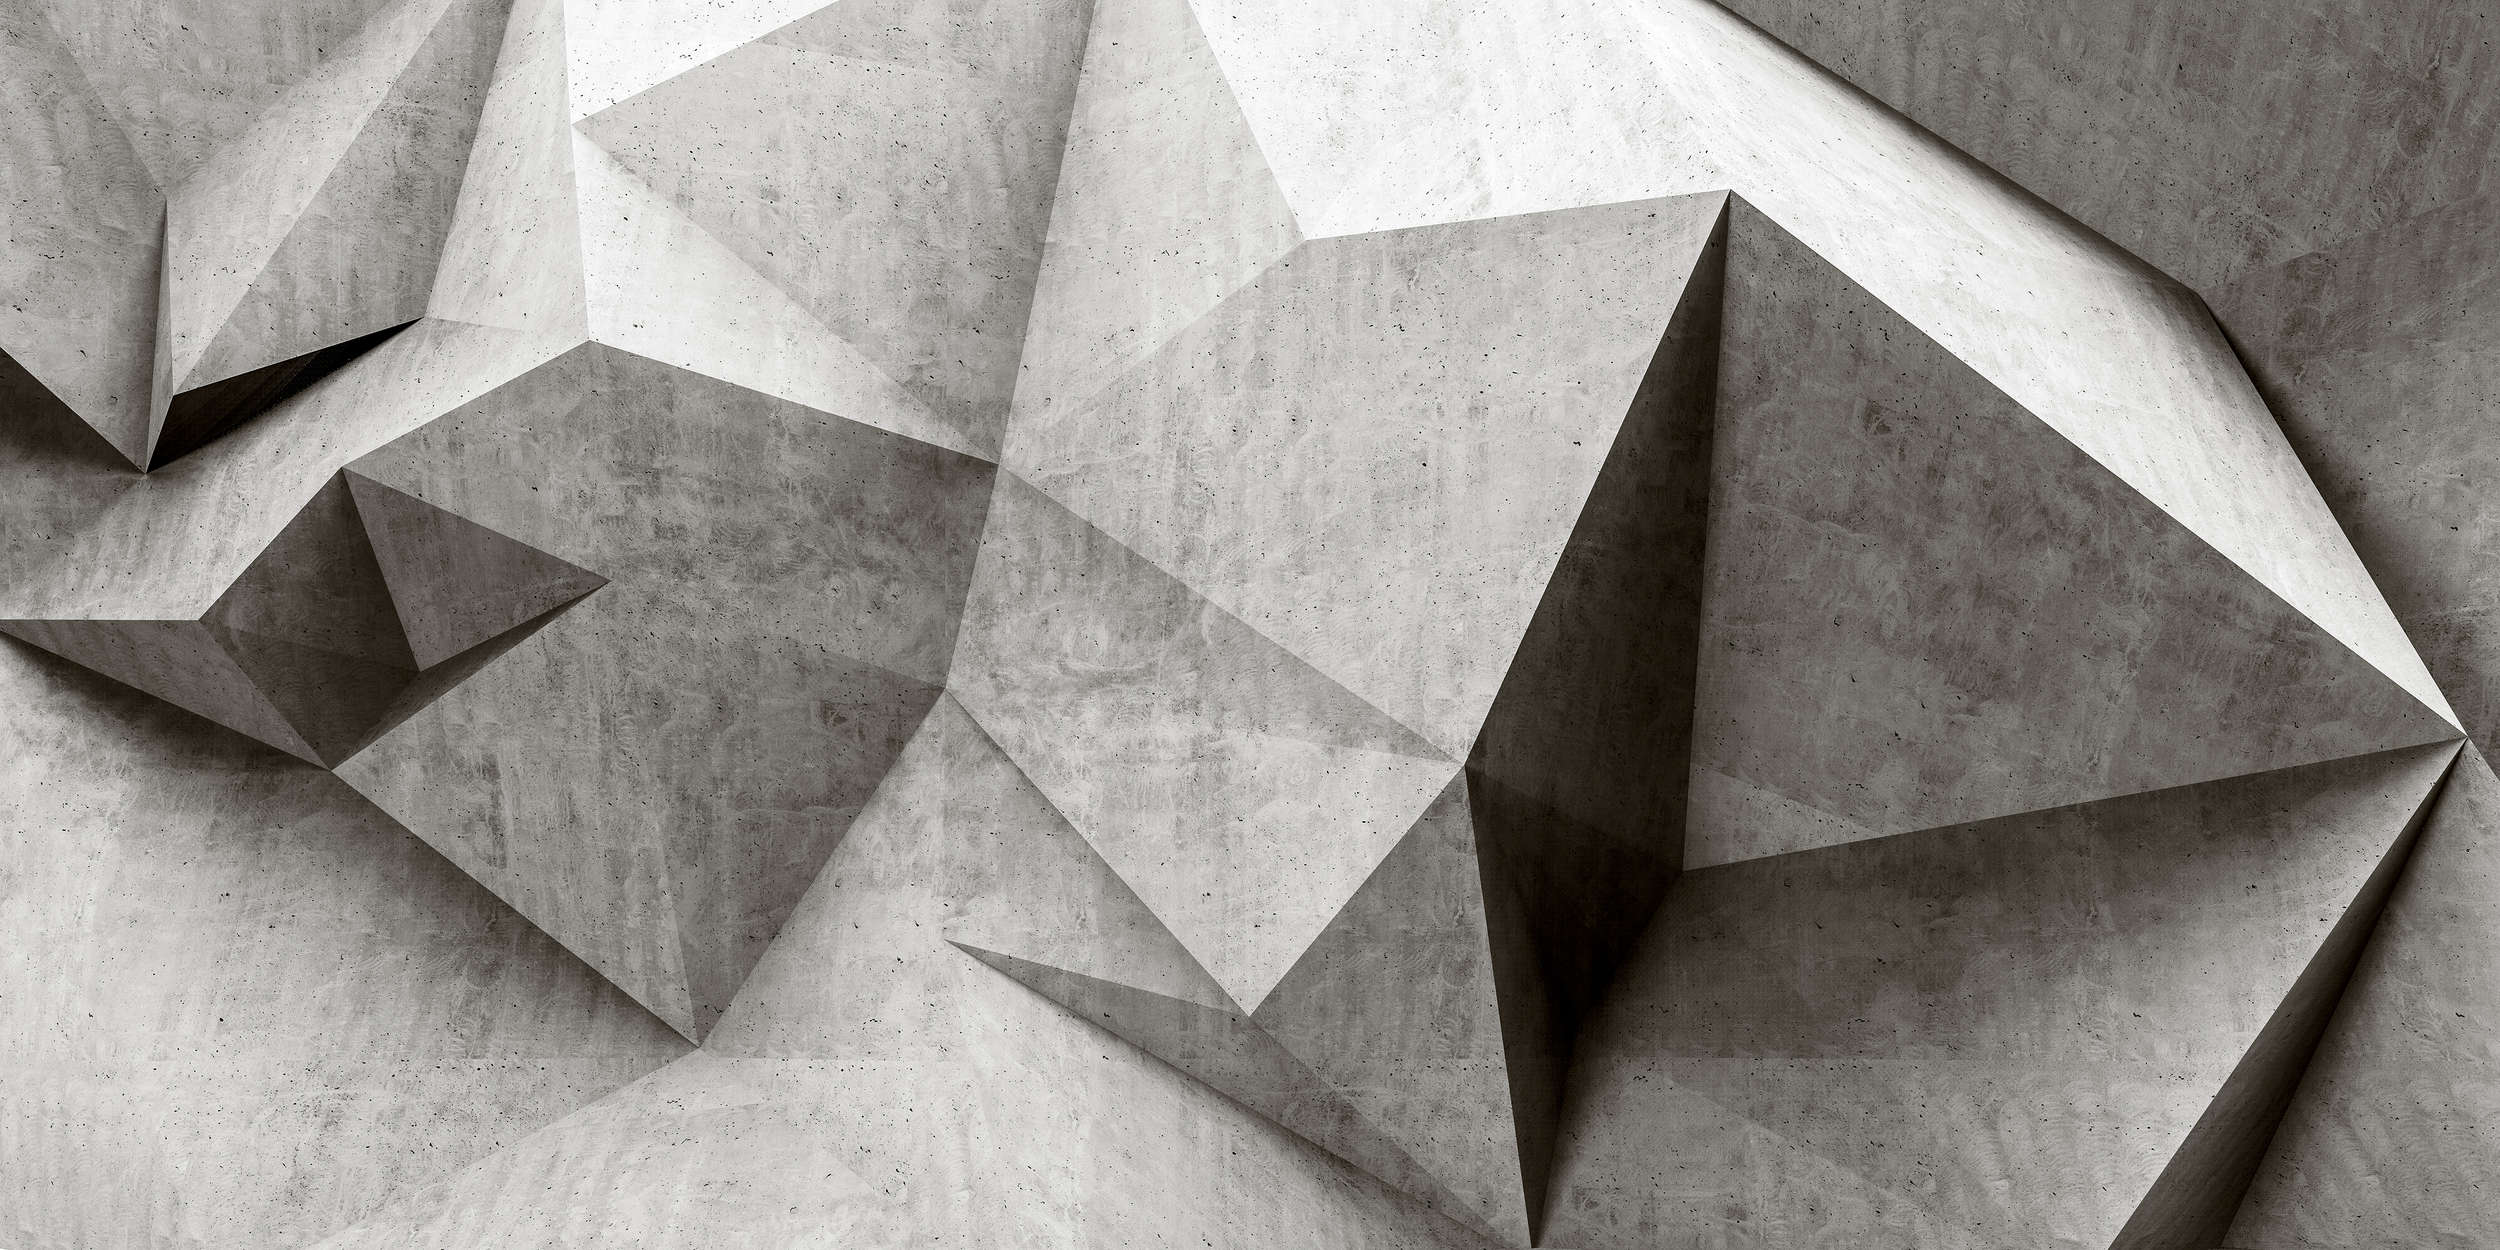             Boulder 1 - Cool 3D Concrete Polygons Onderlaag behang - Grijs, Zwart | Premium Smooth Vliesbehang
        